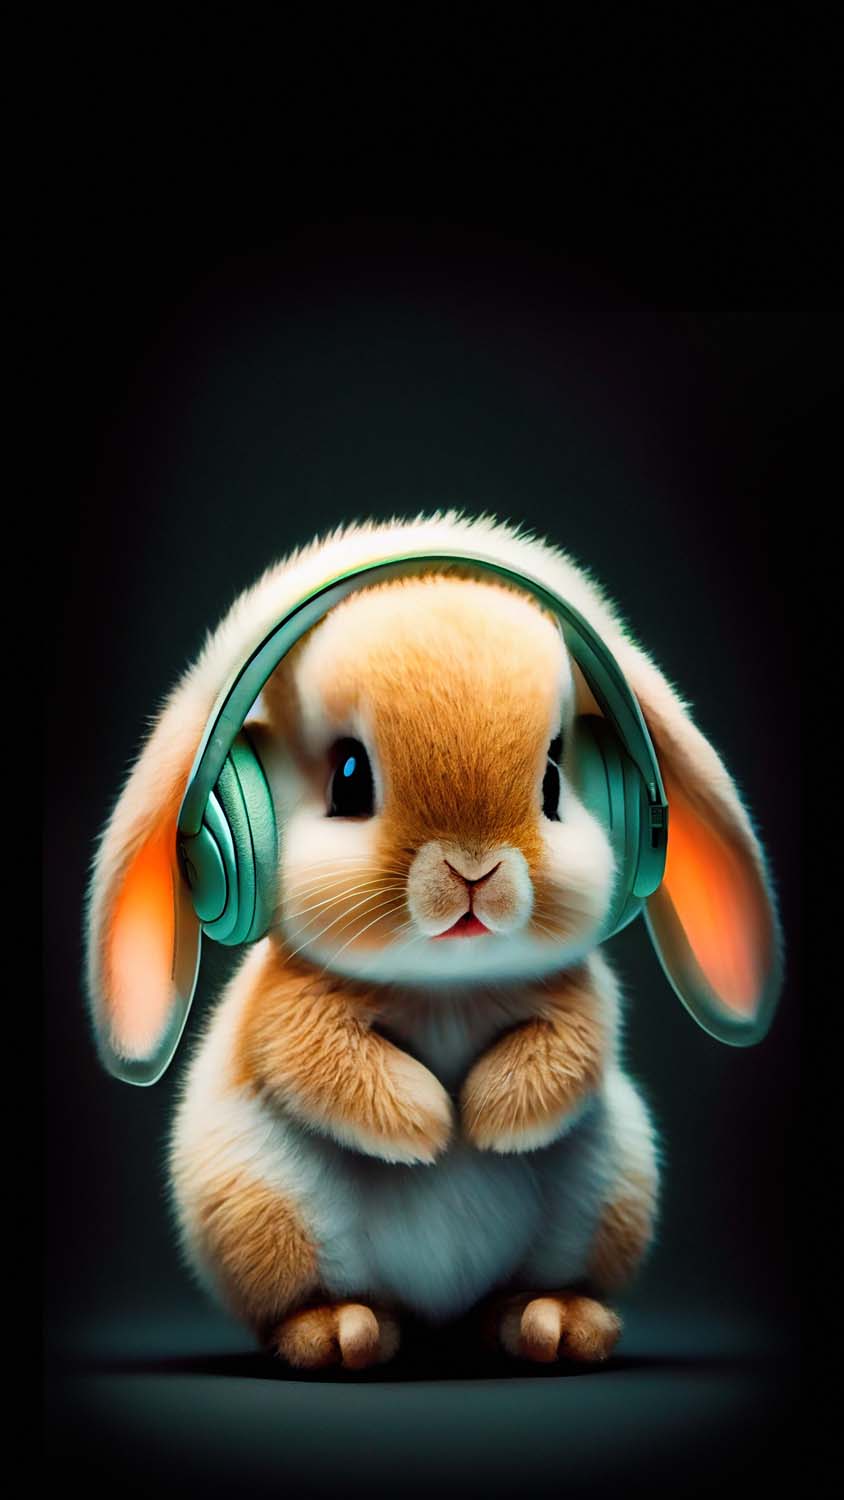 Cute kawaii bunny wallpaper background for iPhone 66s  Bunny wallpaper Rabbit  wallpaper Cute wallpapers